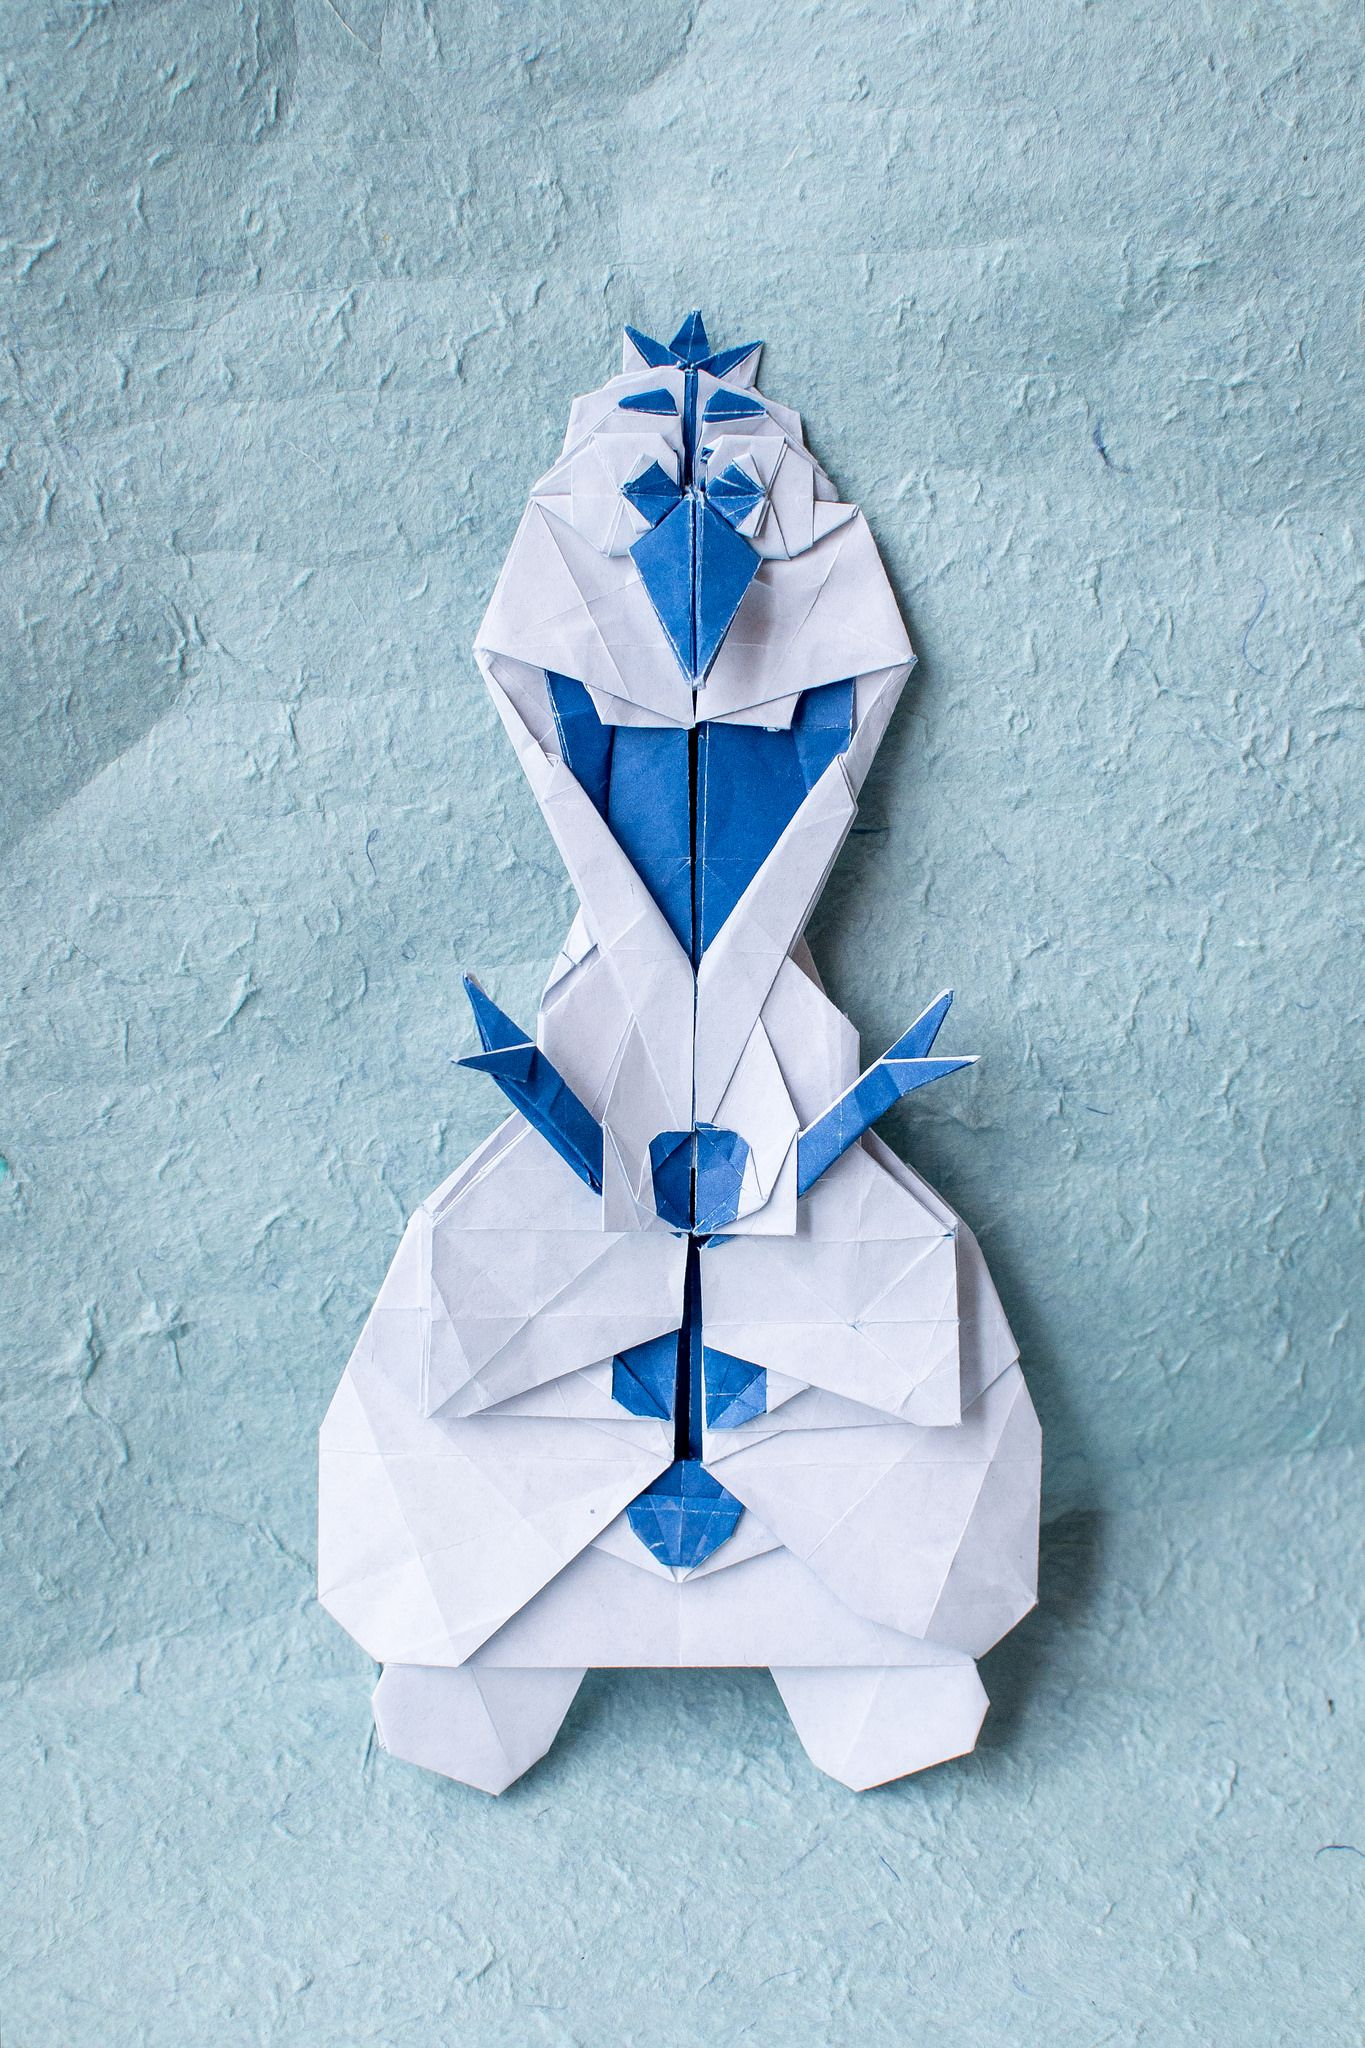 Happy Snowman - Front View | Origami, Seres Mitológicos, Ideias dedans Origami Bonhomme De Neige